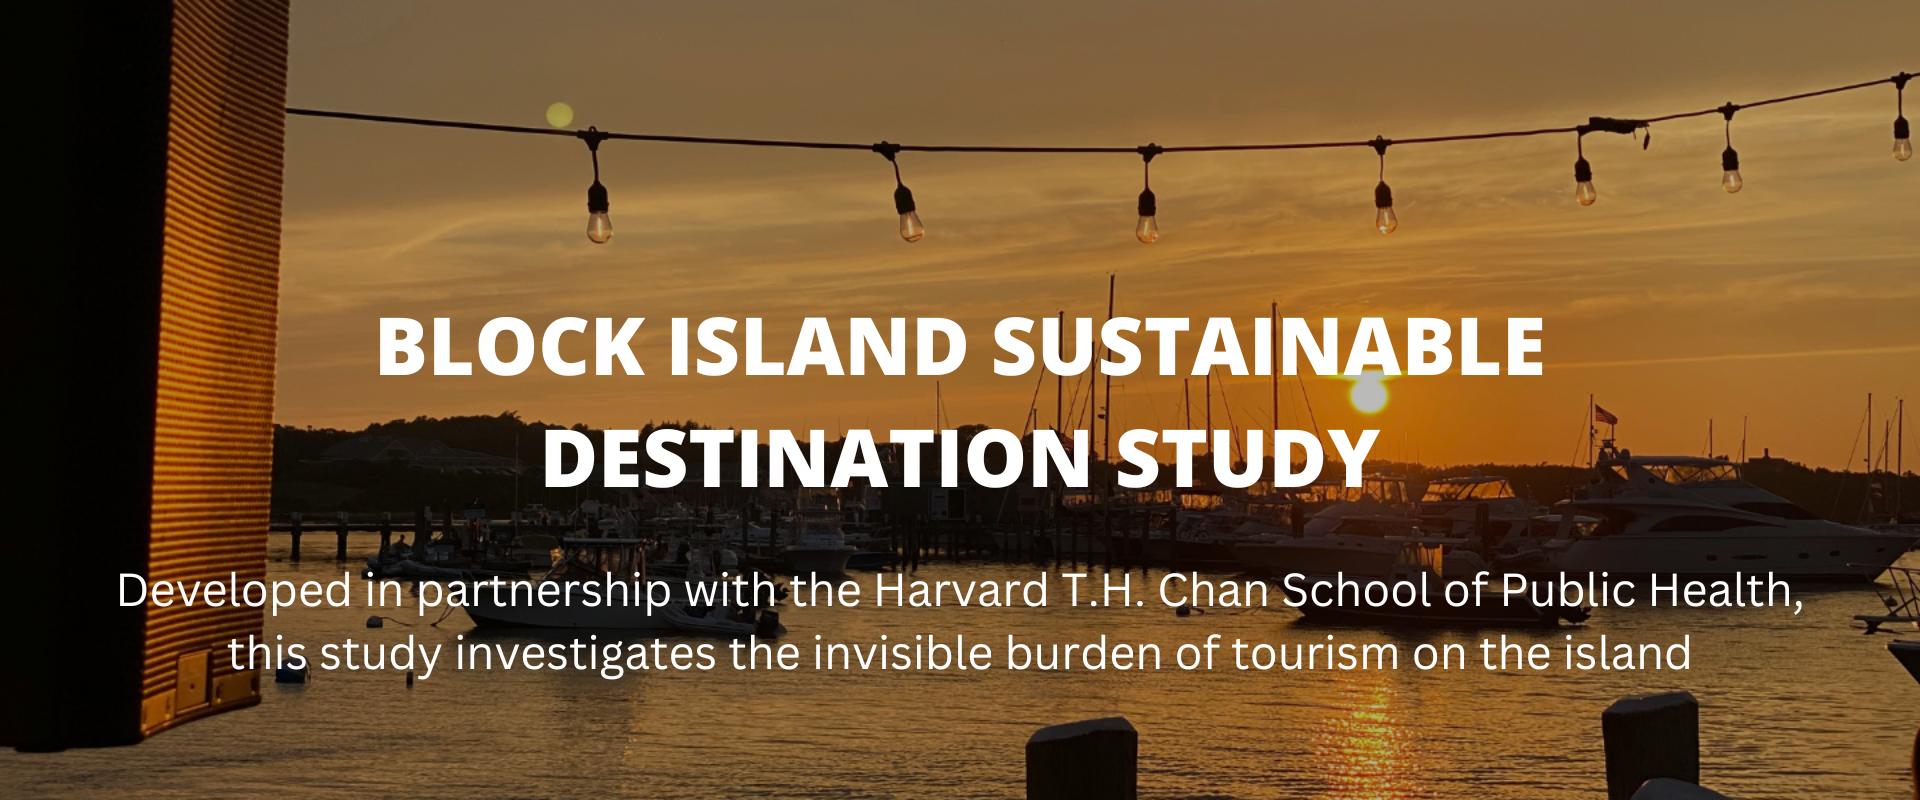 Block Island Sustainable Destination Study with Harvard T.H. Chan School of Public Health